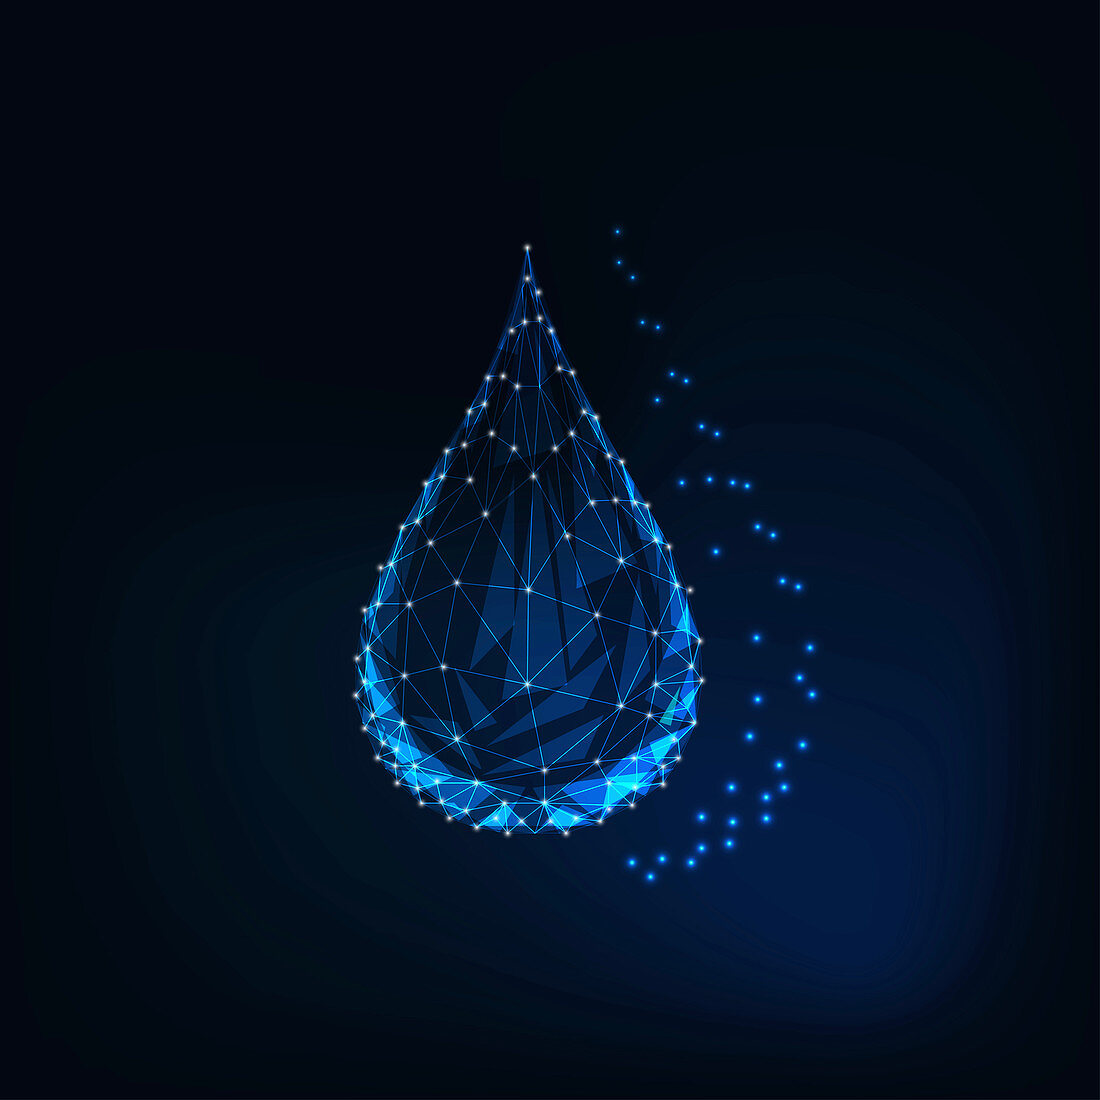 Water drop, illustration